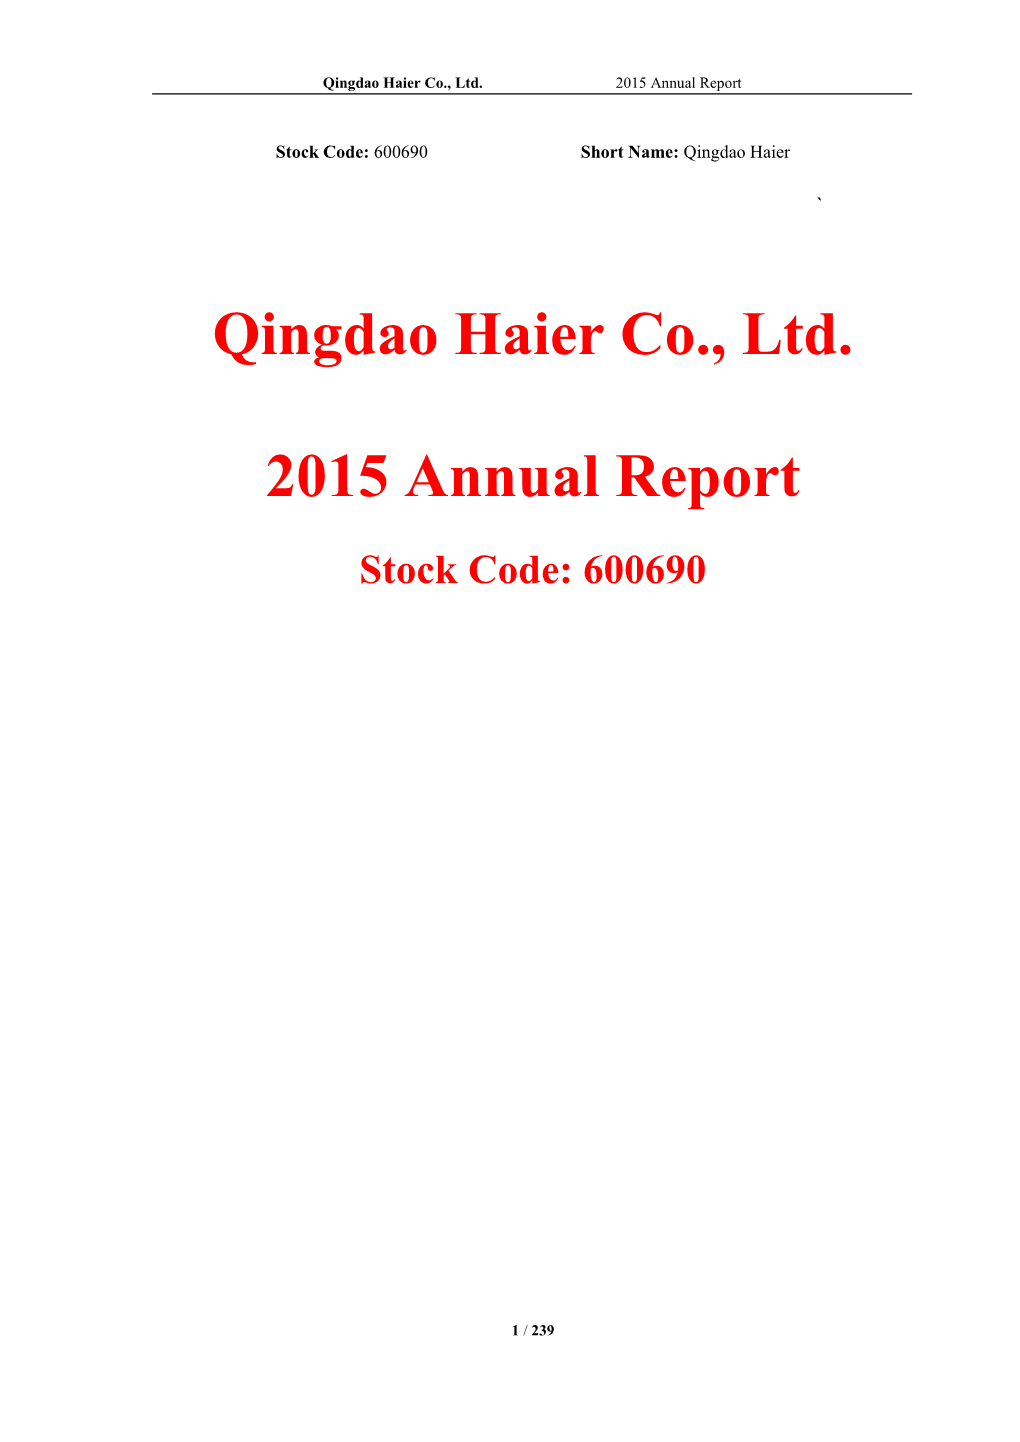 Qingdao Haier Co., Ltd. 2015 Annual Report